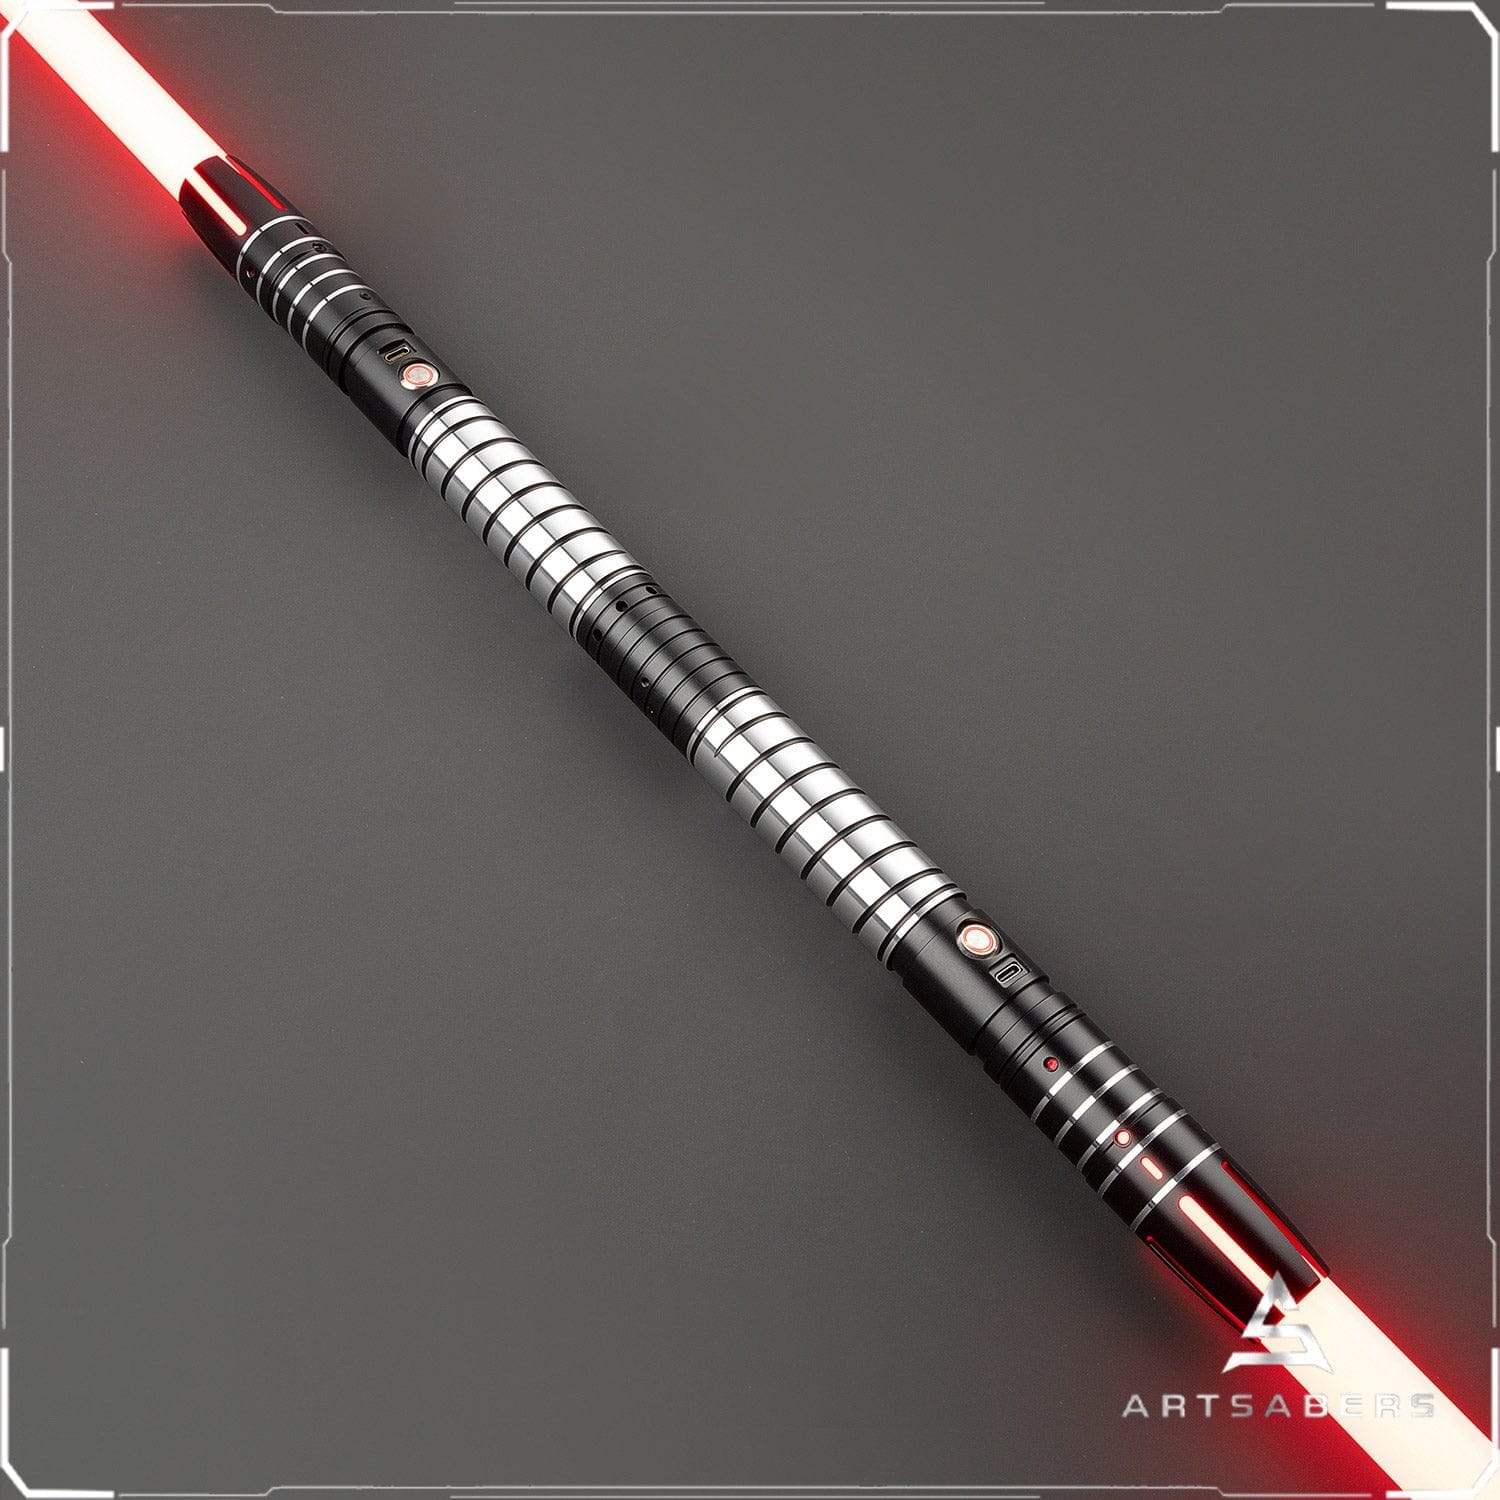 IRONSTRIKE Double Bladed saber Star Wars saber ARTSABERS